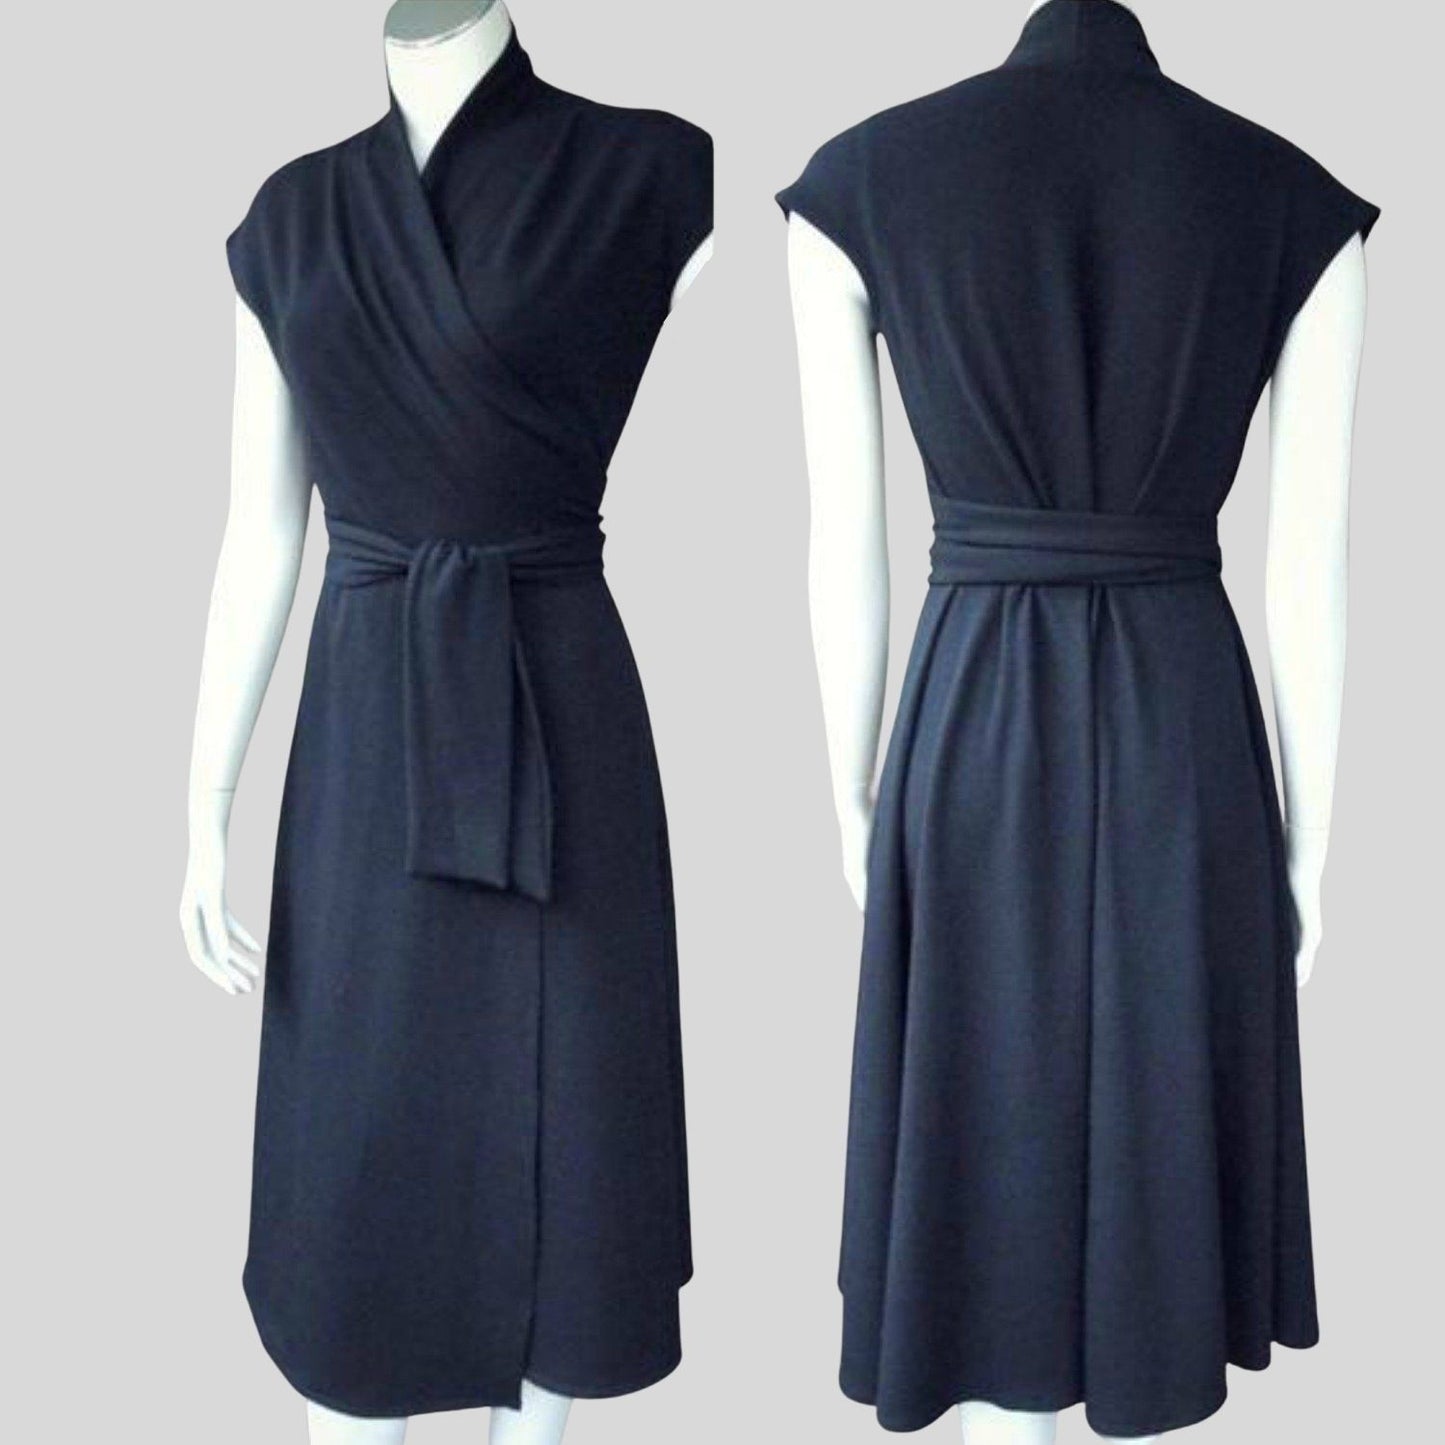 Shop Long black wrap dress | Buy wrap dresses made in Canada